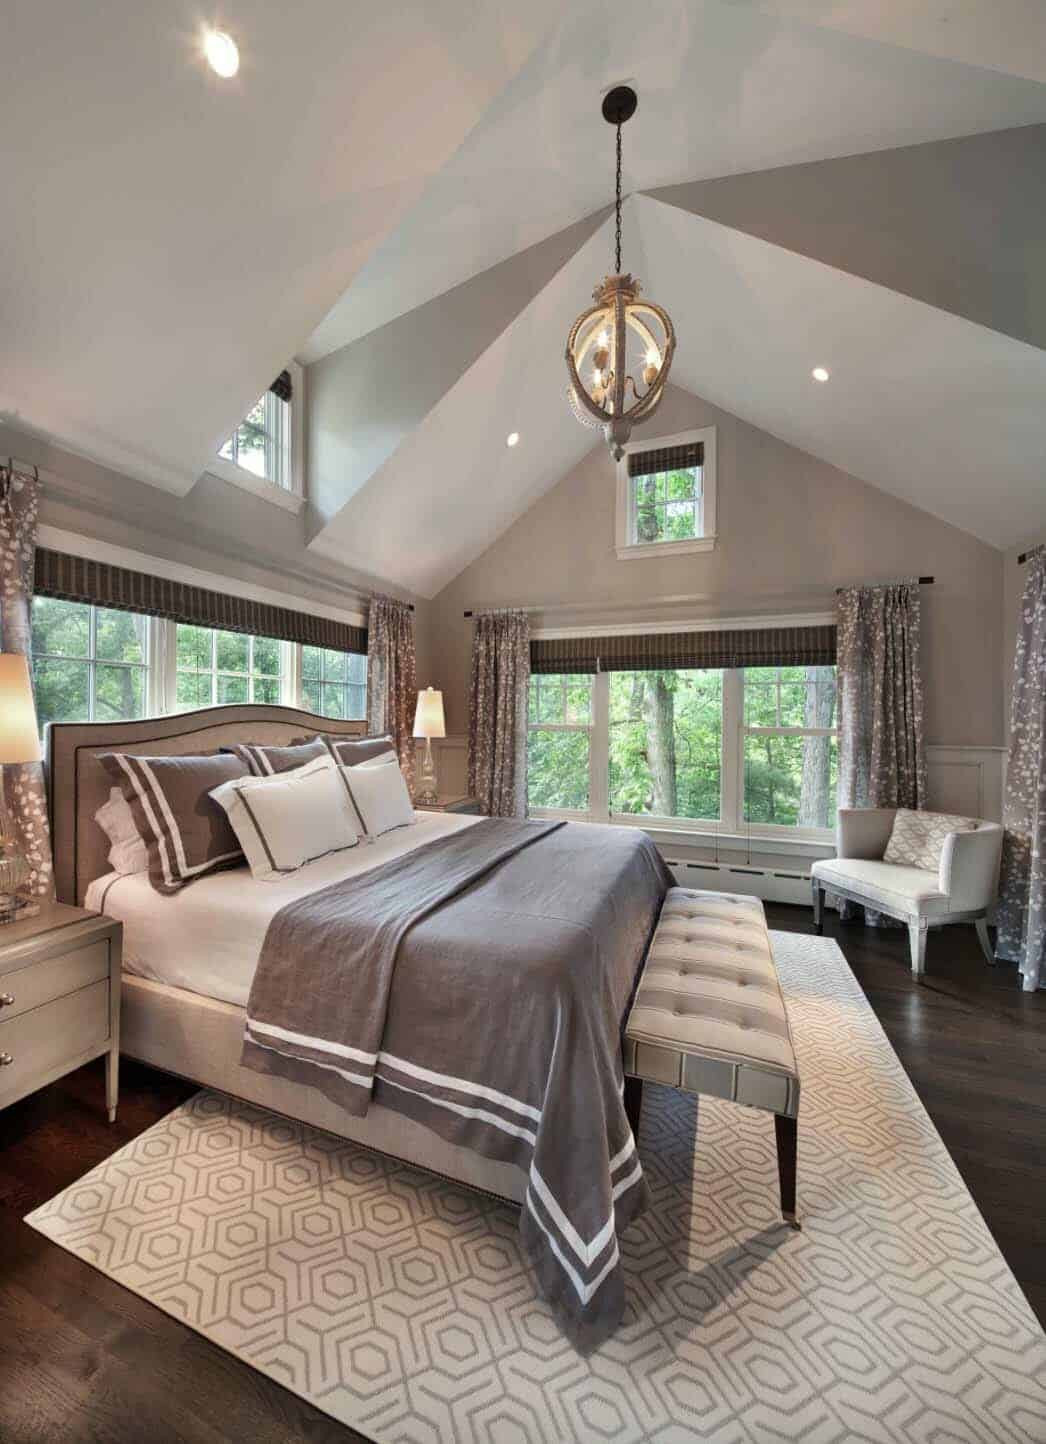 Master Bedroom Inspiration
 25 Absolutely stunning master bedroom color scheme ideas